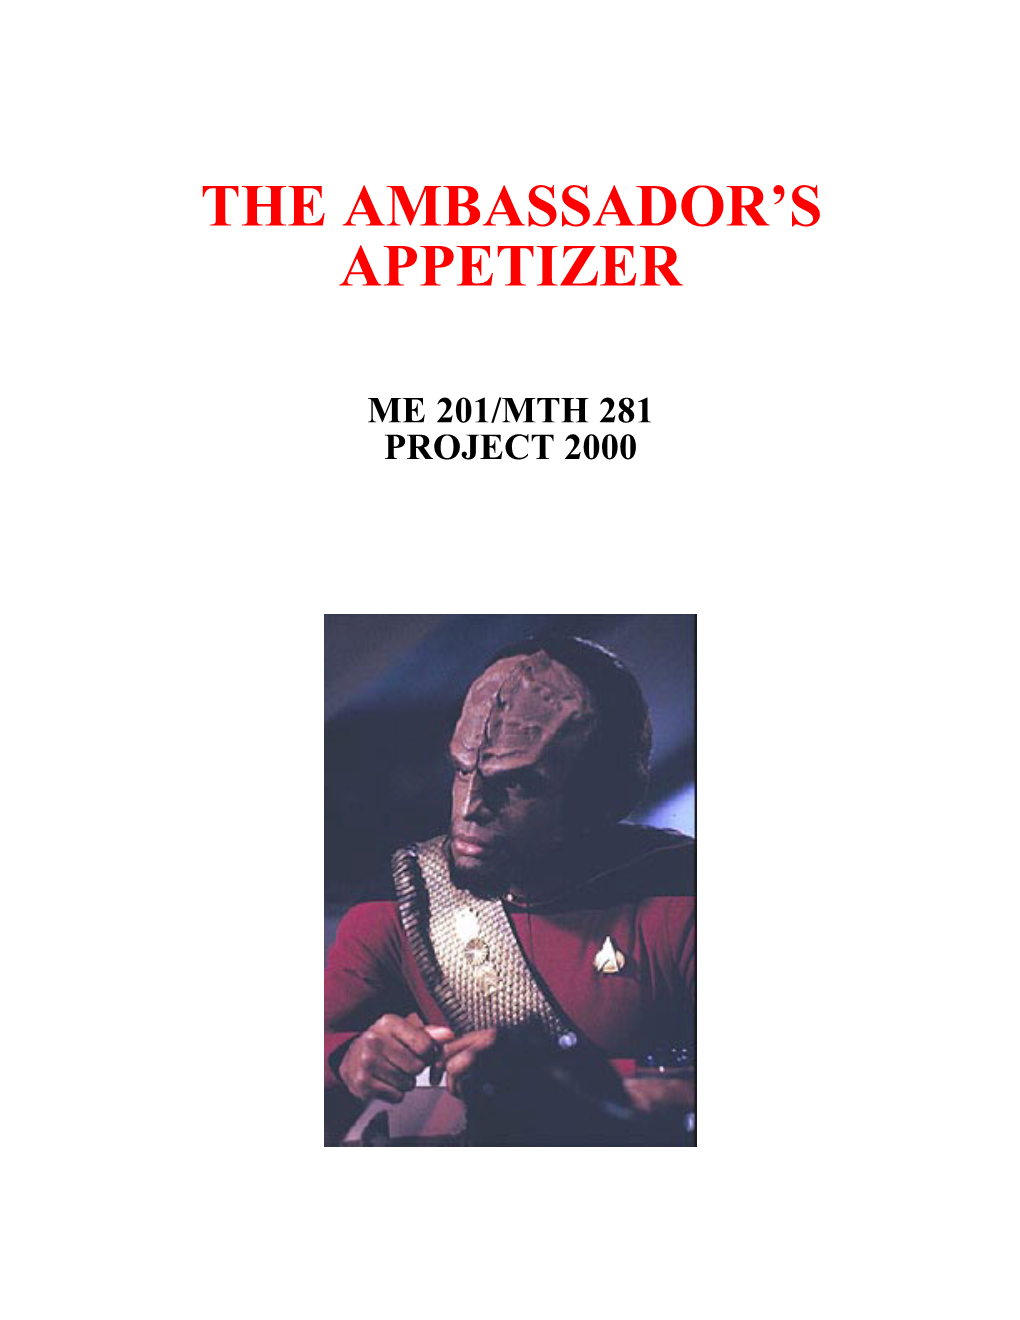 The Ambassador's Appetizer